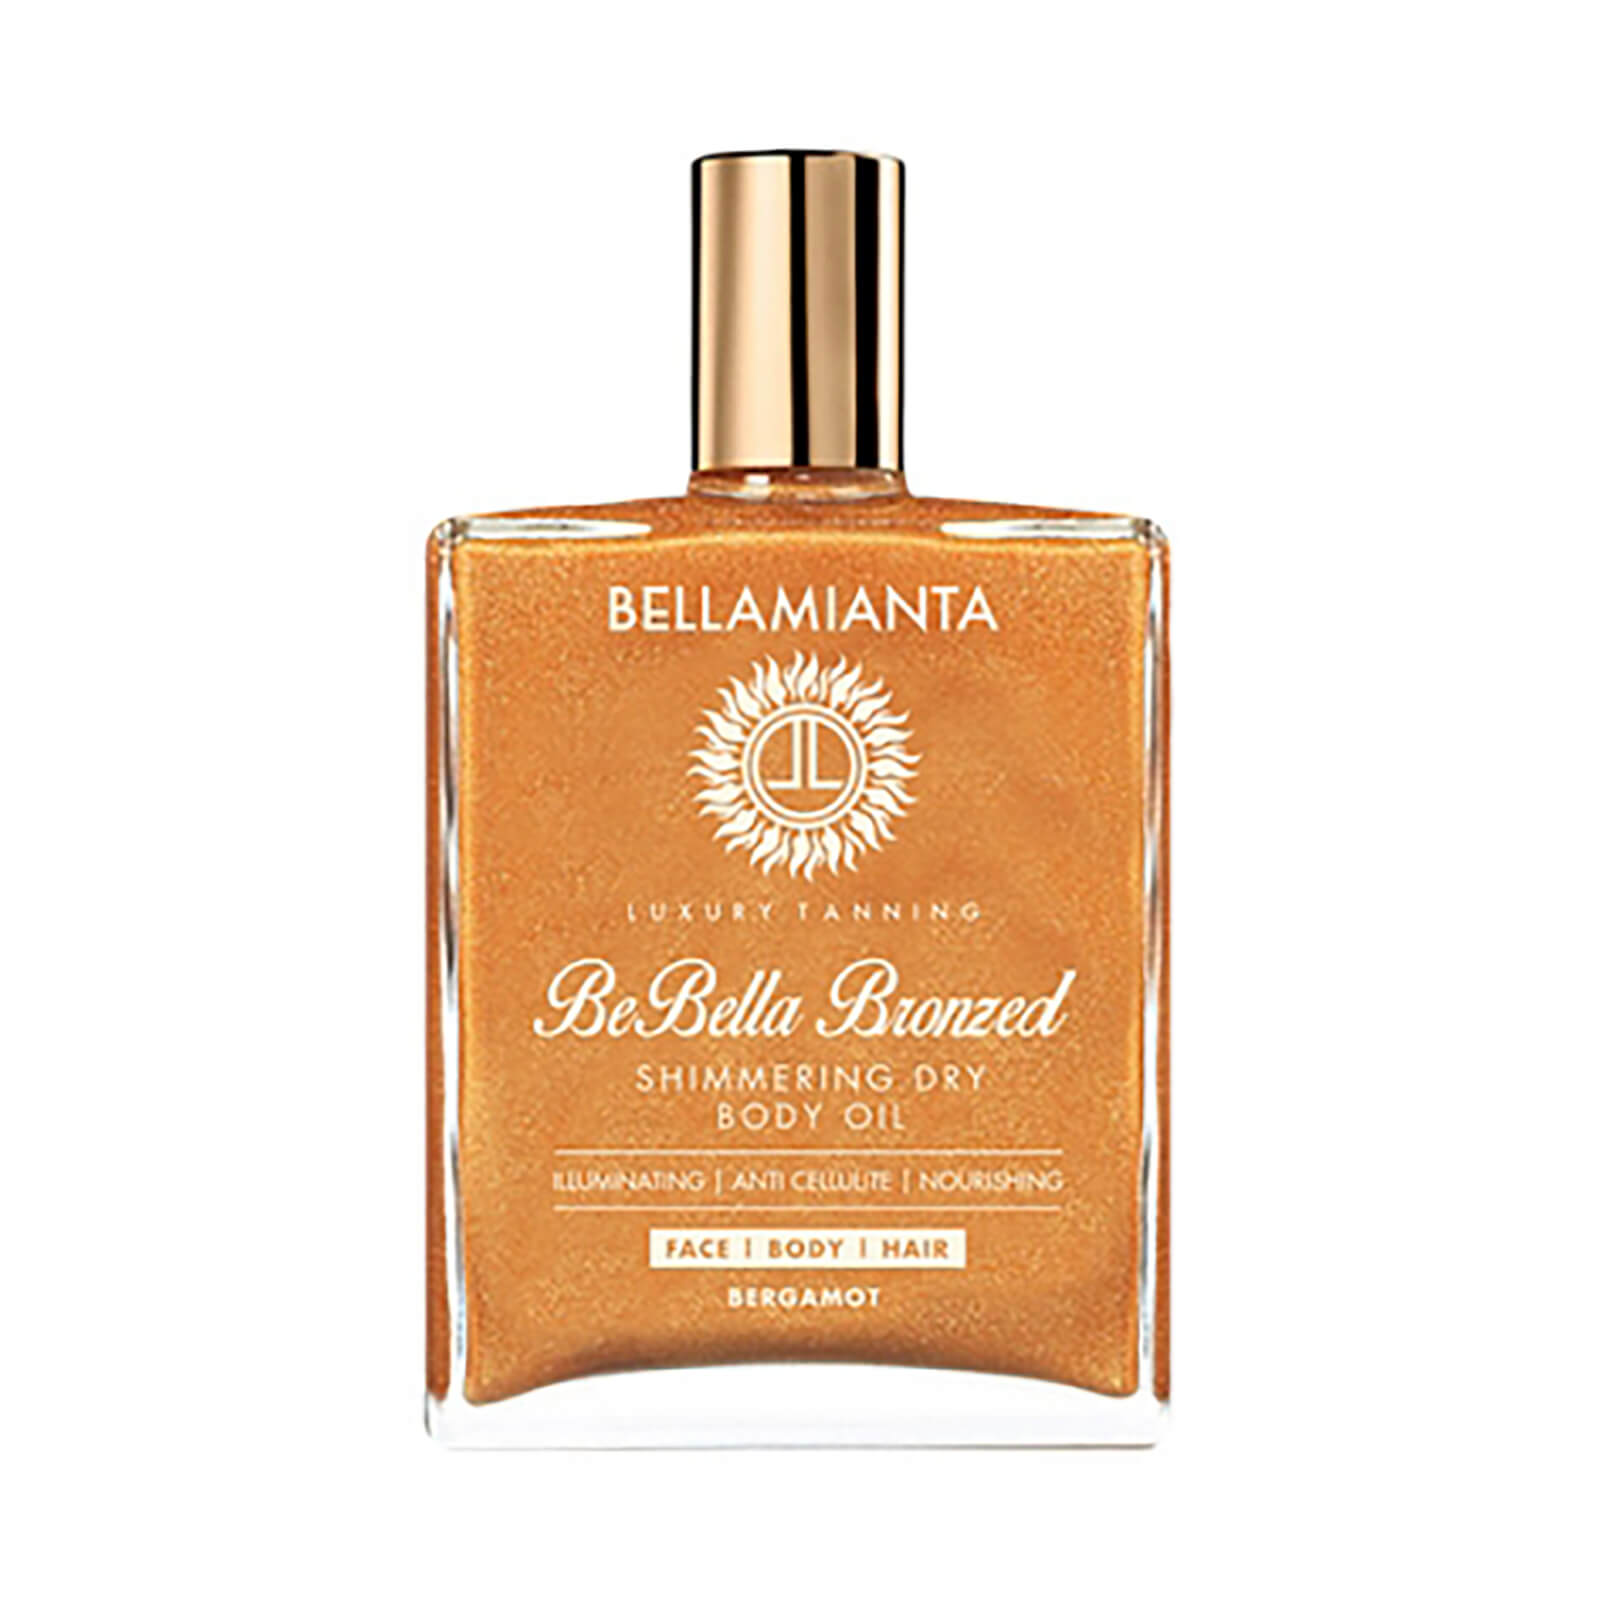 Bellamianta Be Bella Bronzed Shimmering Dry Body Oil 50ml